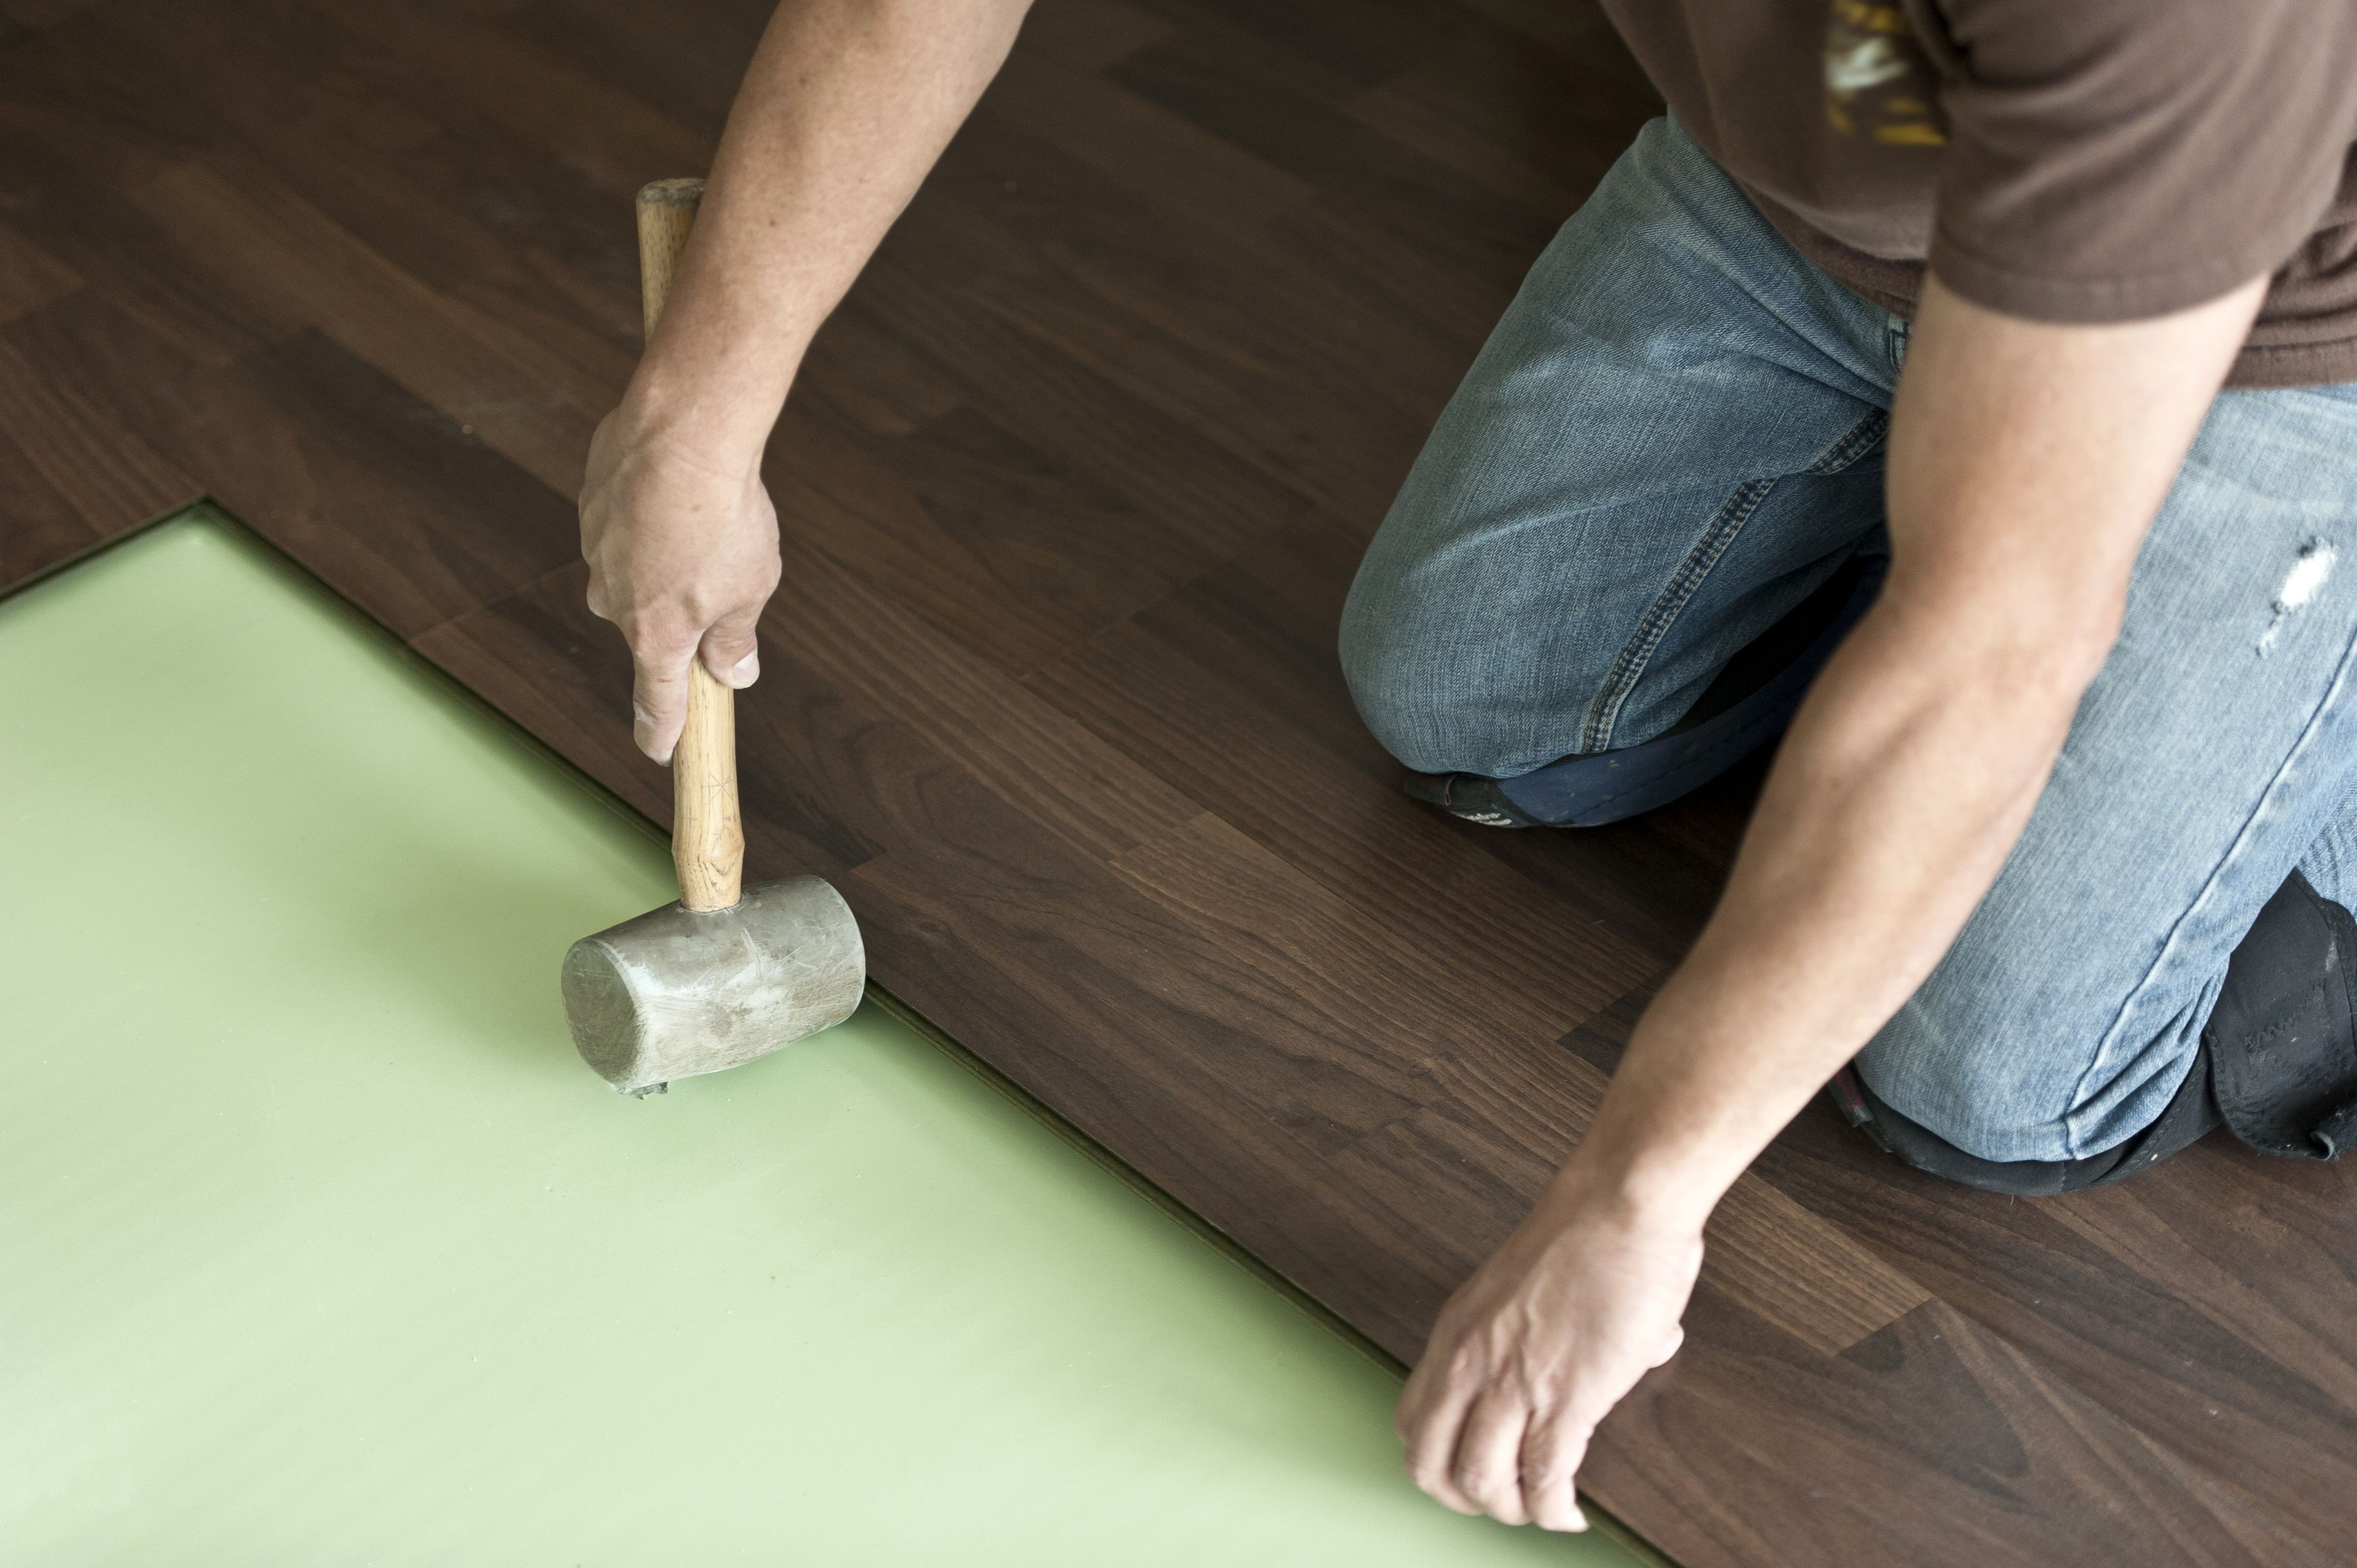 hardwood flooring washington dc of can a foam pad be use under solid hardwood flooring within installing hardwood floor 155149312 57e967d45f9b586c35ade84a